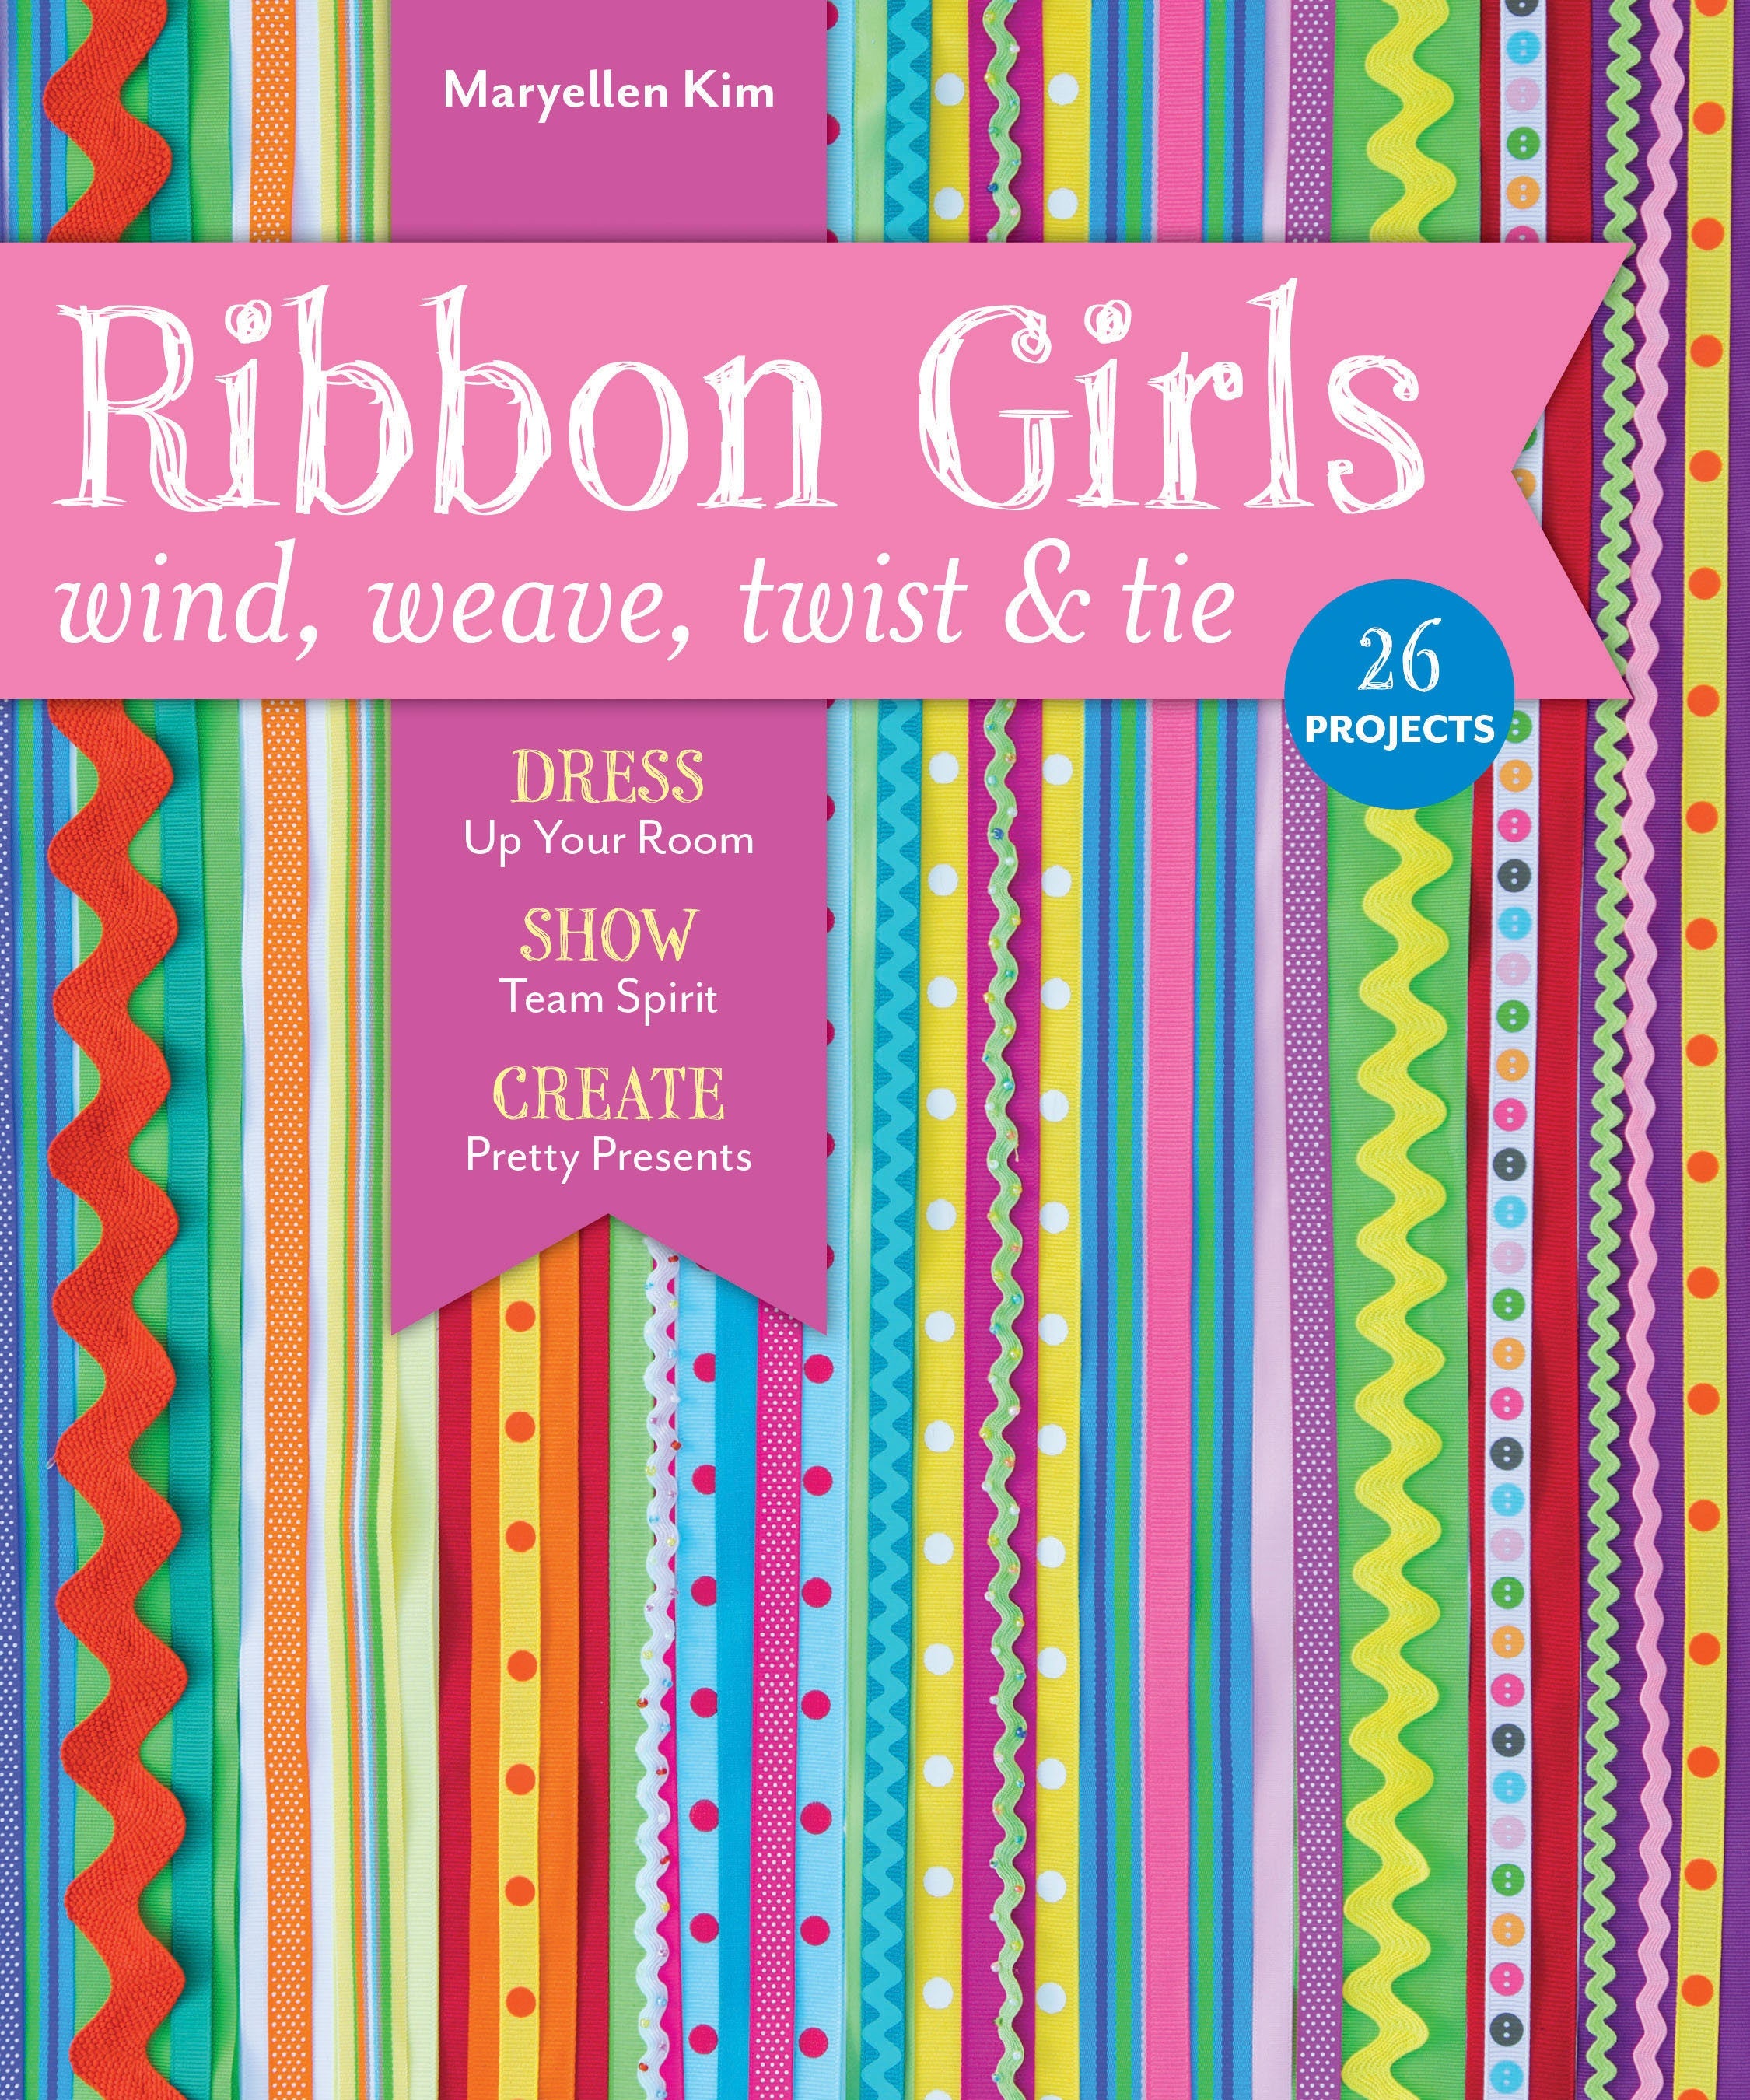 Ribbon Girls Wind Weave Twist Tie Craft Book by Maryellen Kim for C&T Publishing